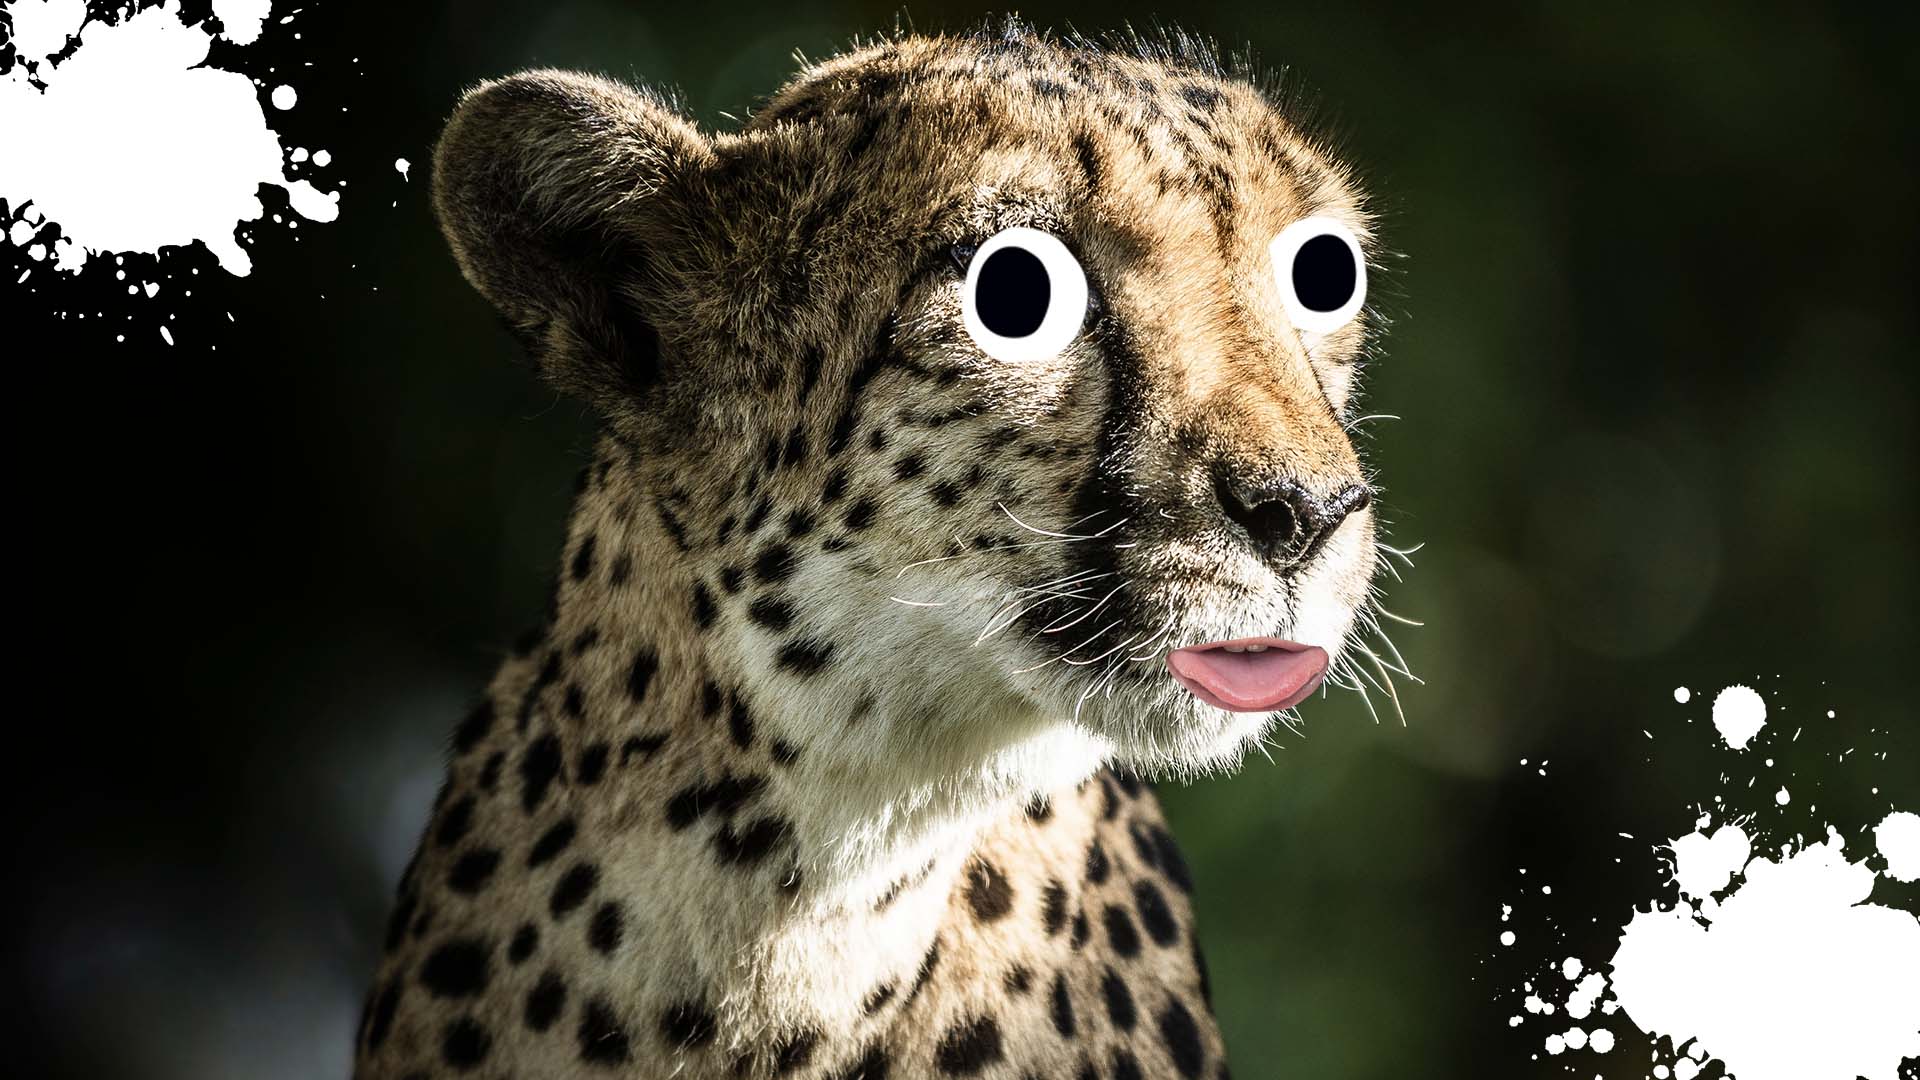 A close up of a cheetah’s face